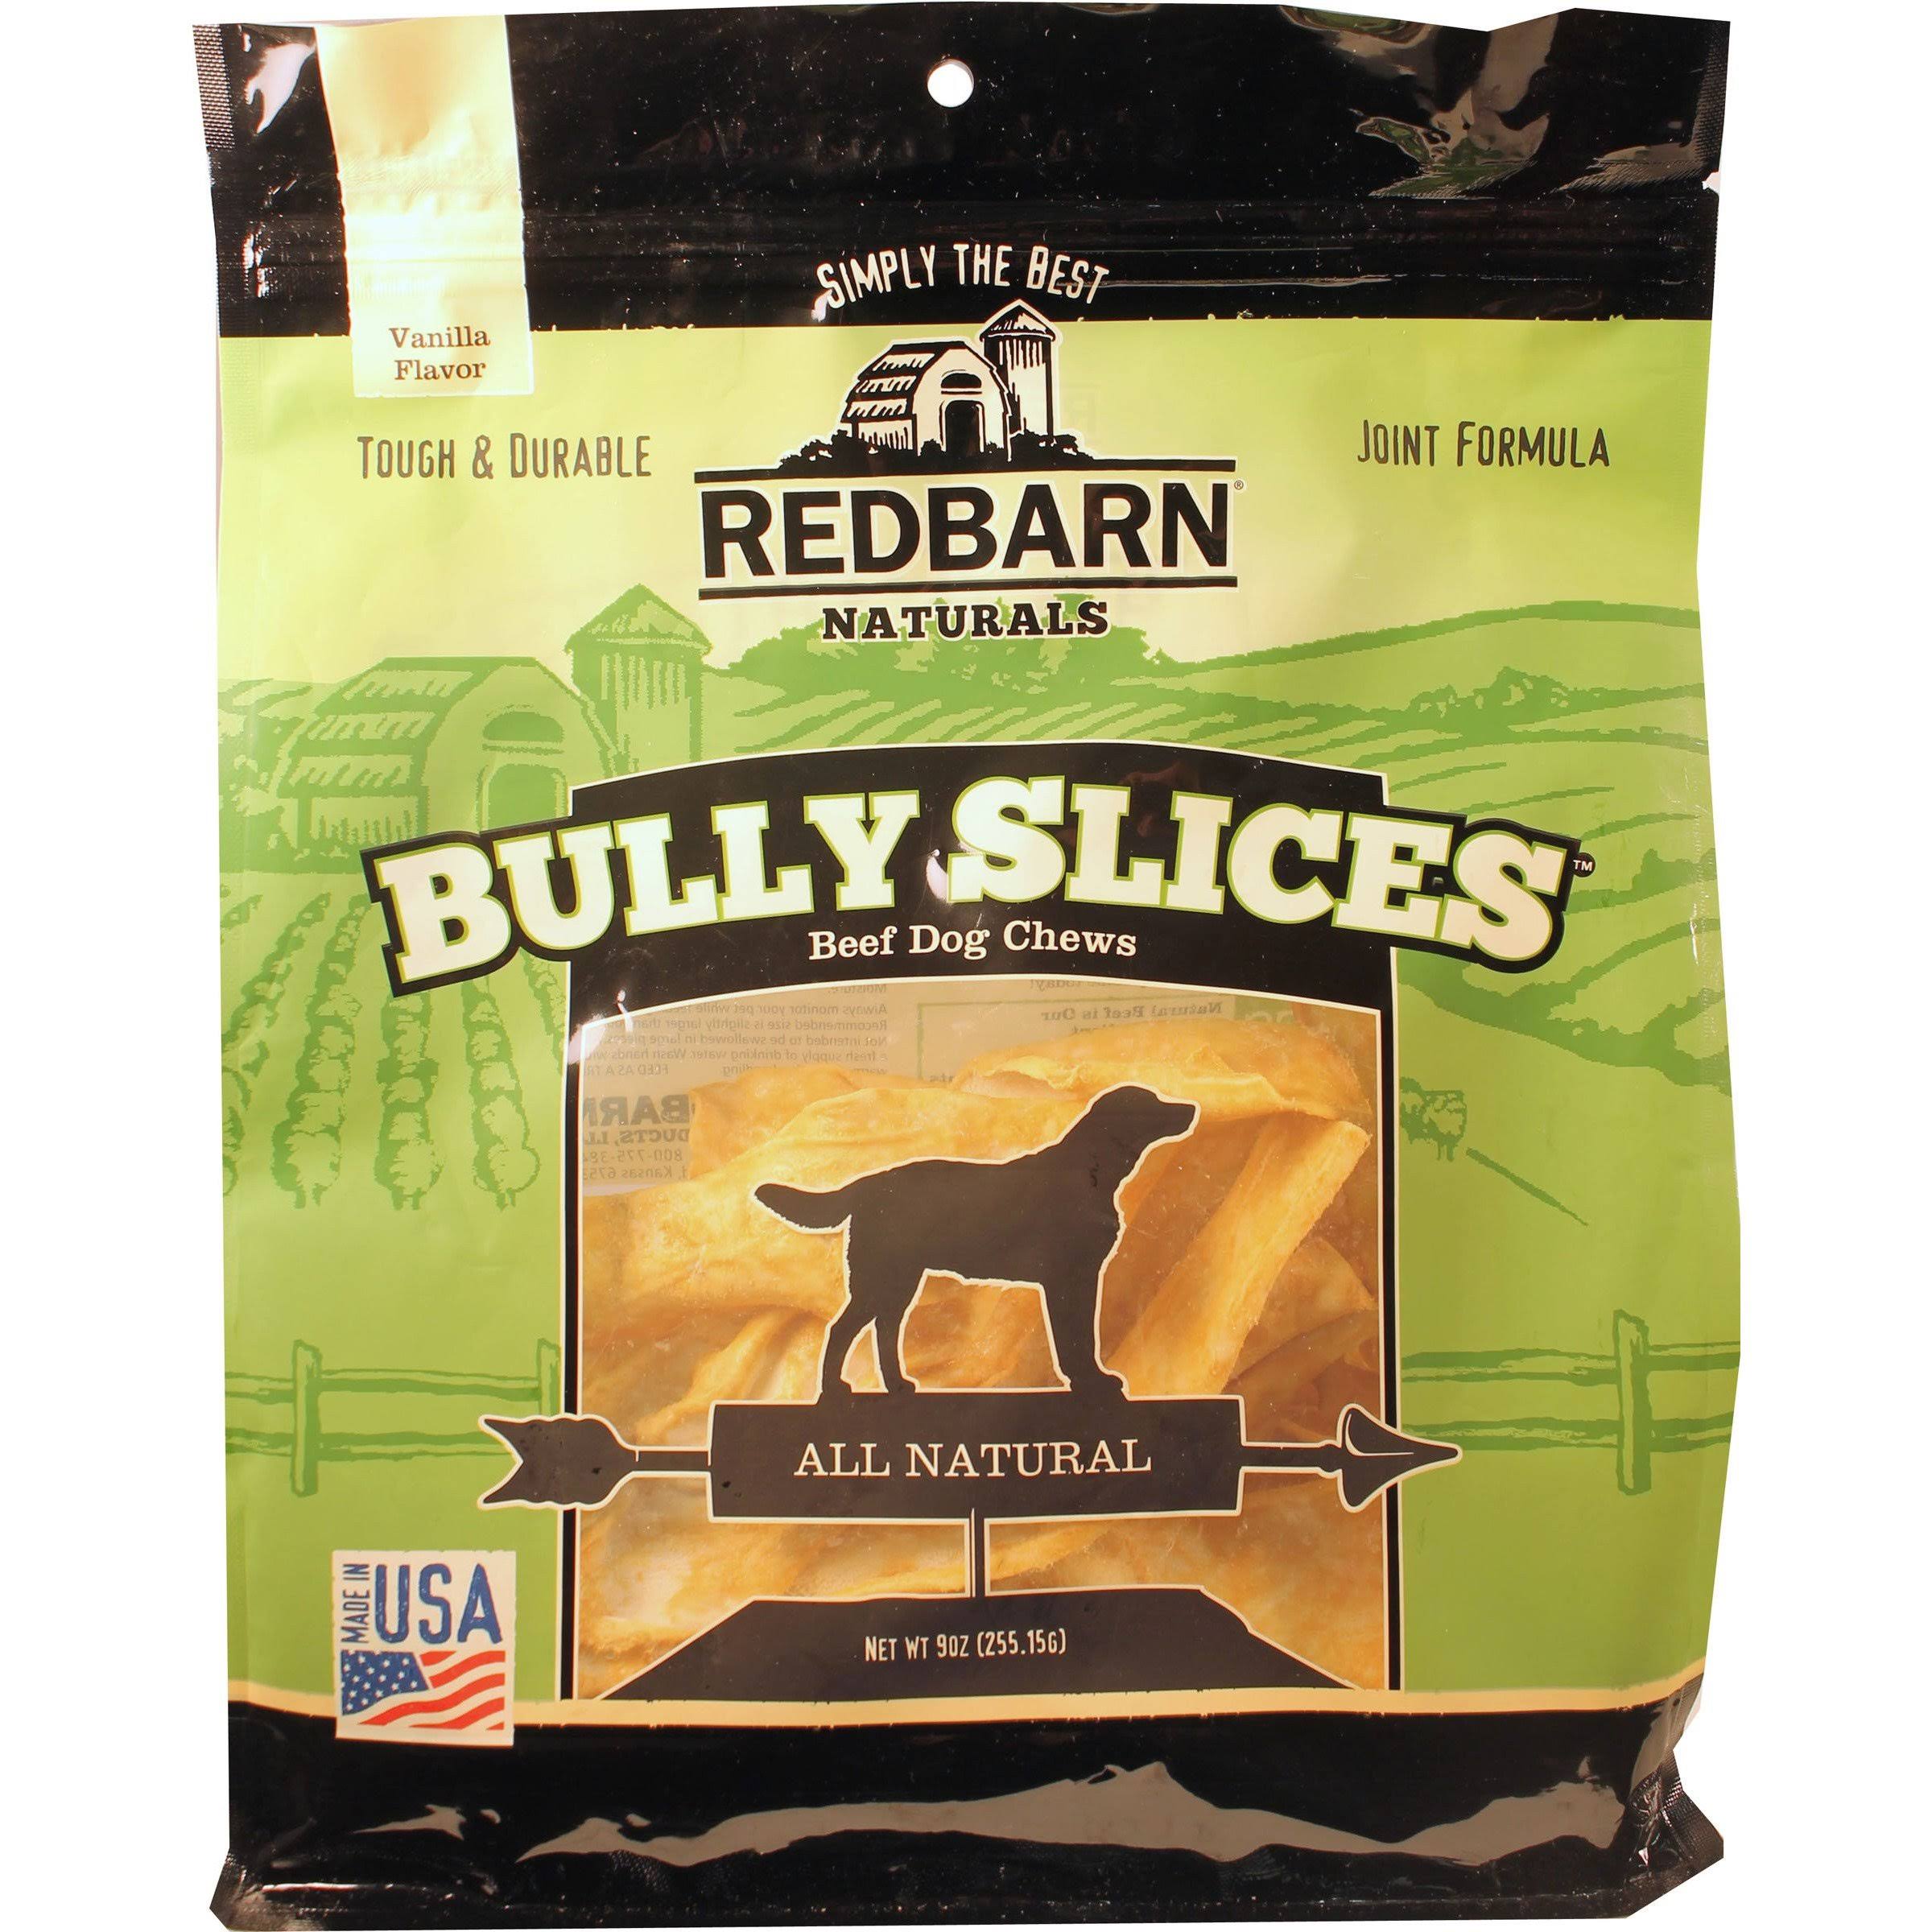 Red Barn Naturals Bully Slices Beef Dog Chews - Vanilla, 6 x 9oz